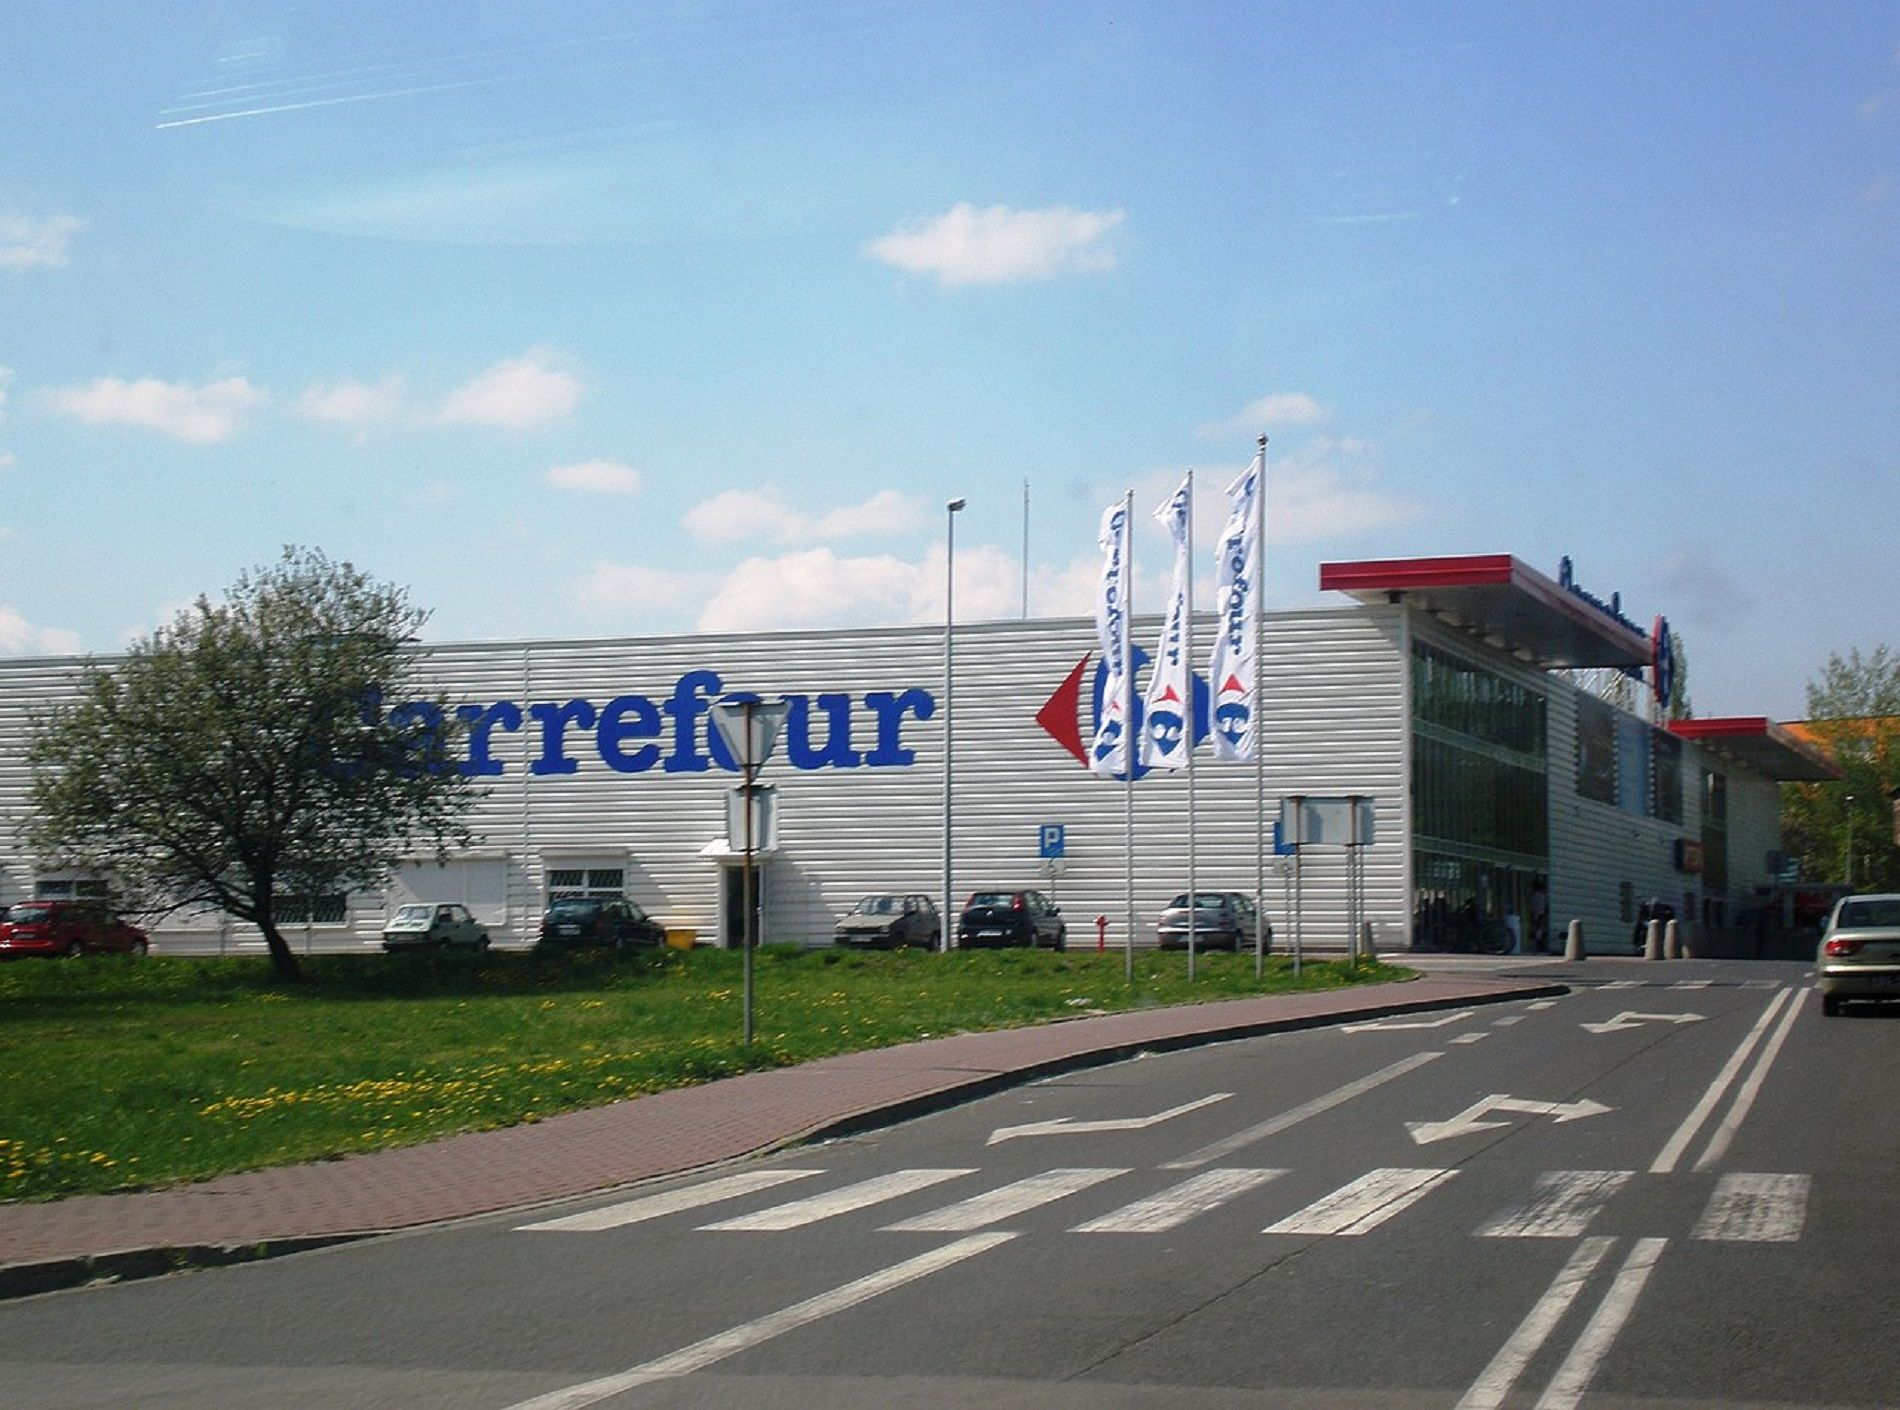 Carrefour / Wikipedia